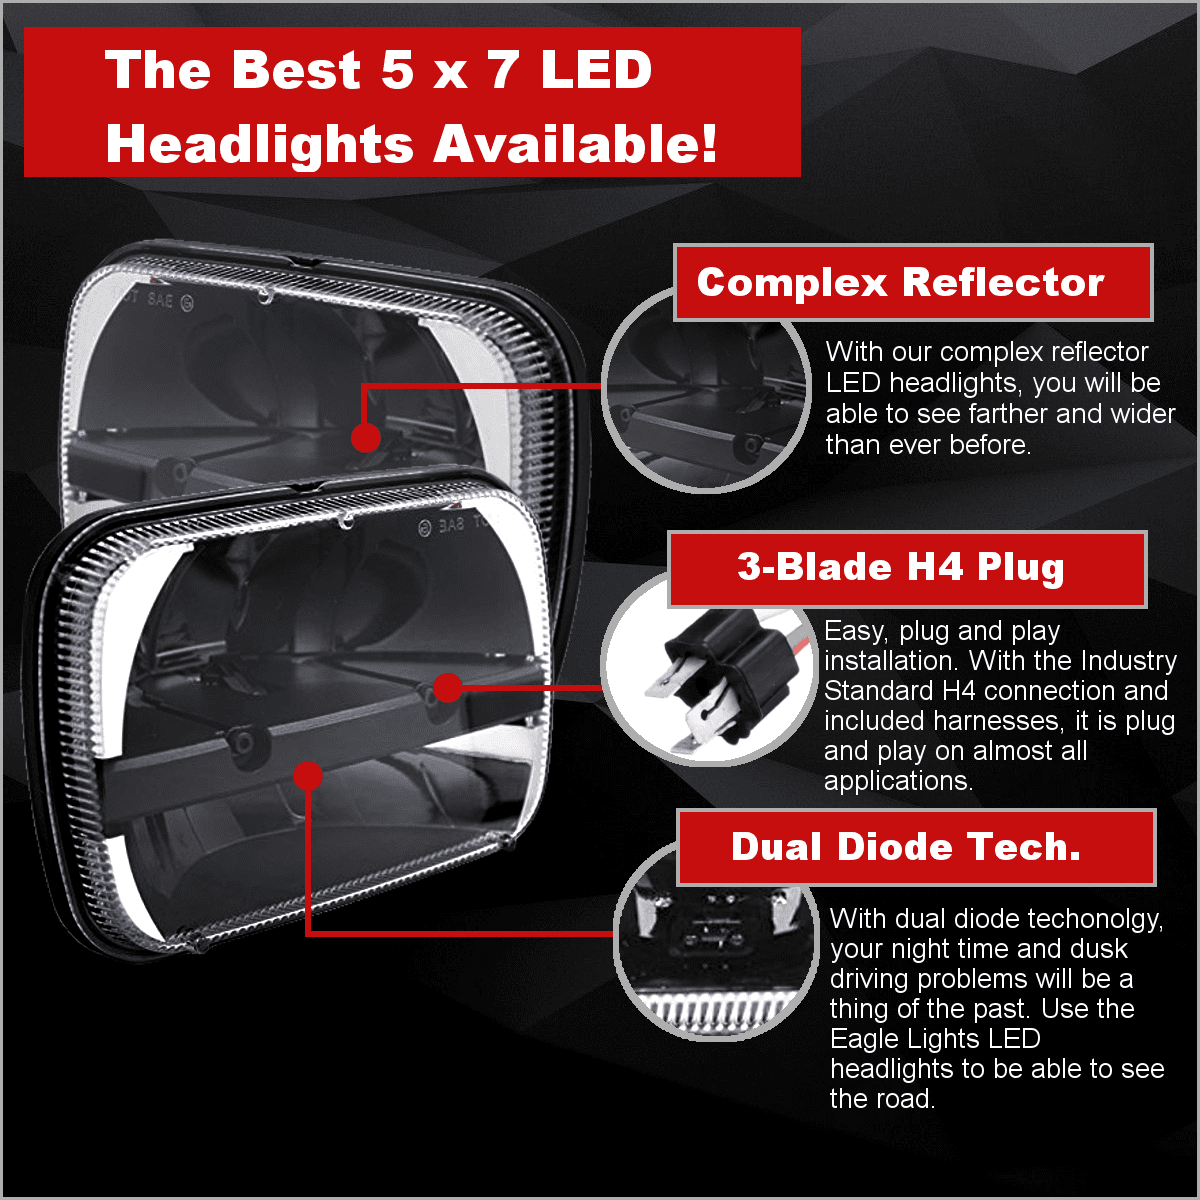 5 X 7 LED Headlights - Eagle Lights Complex Reflector 5 X 7 LED Headlight